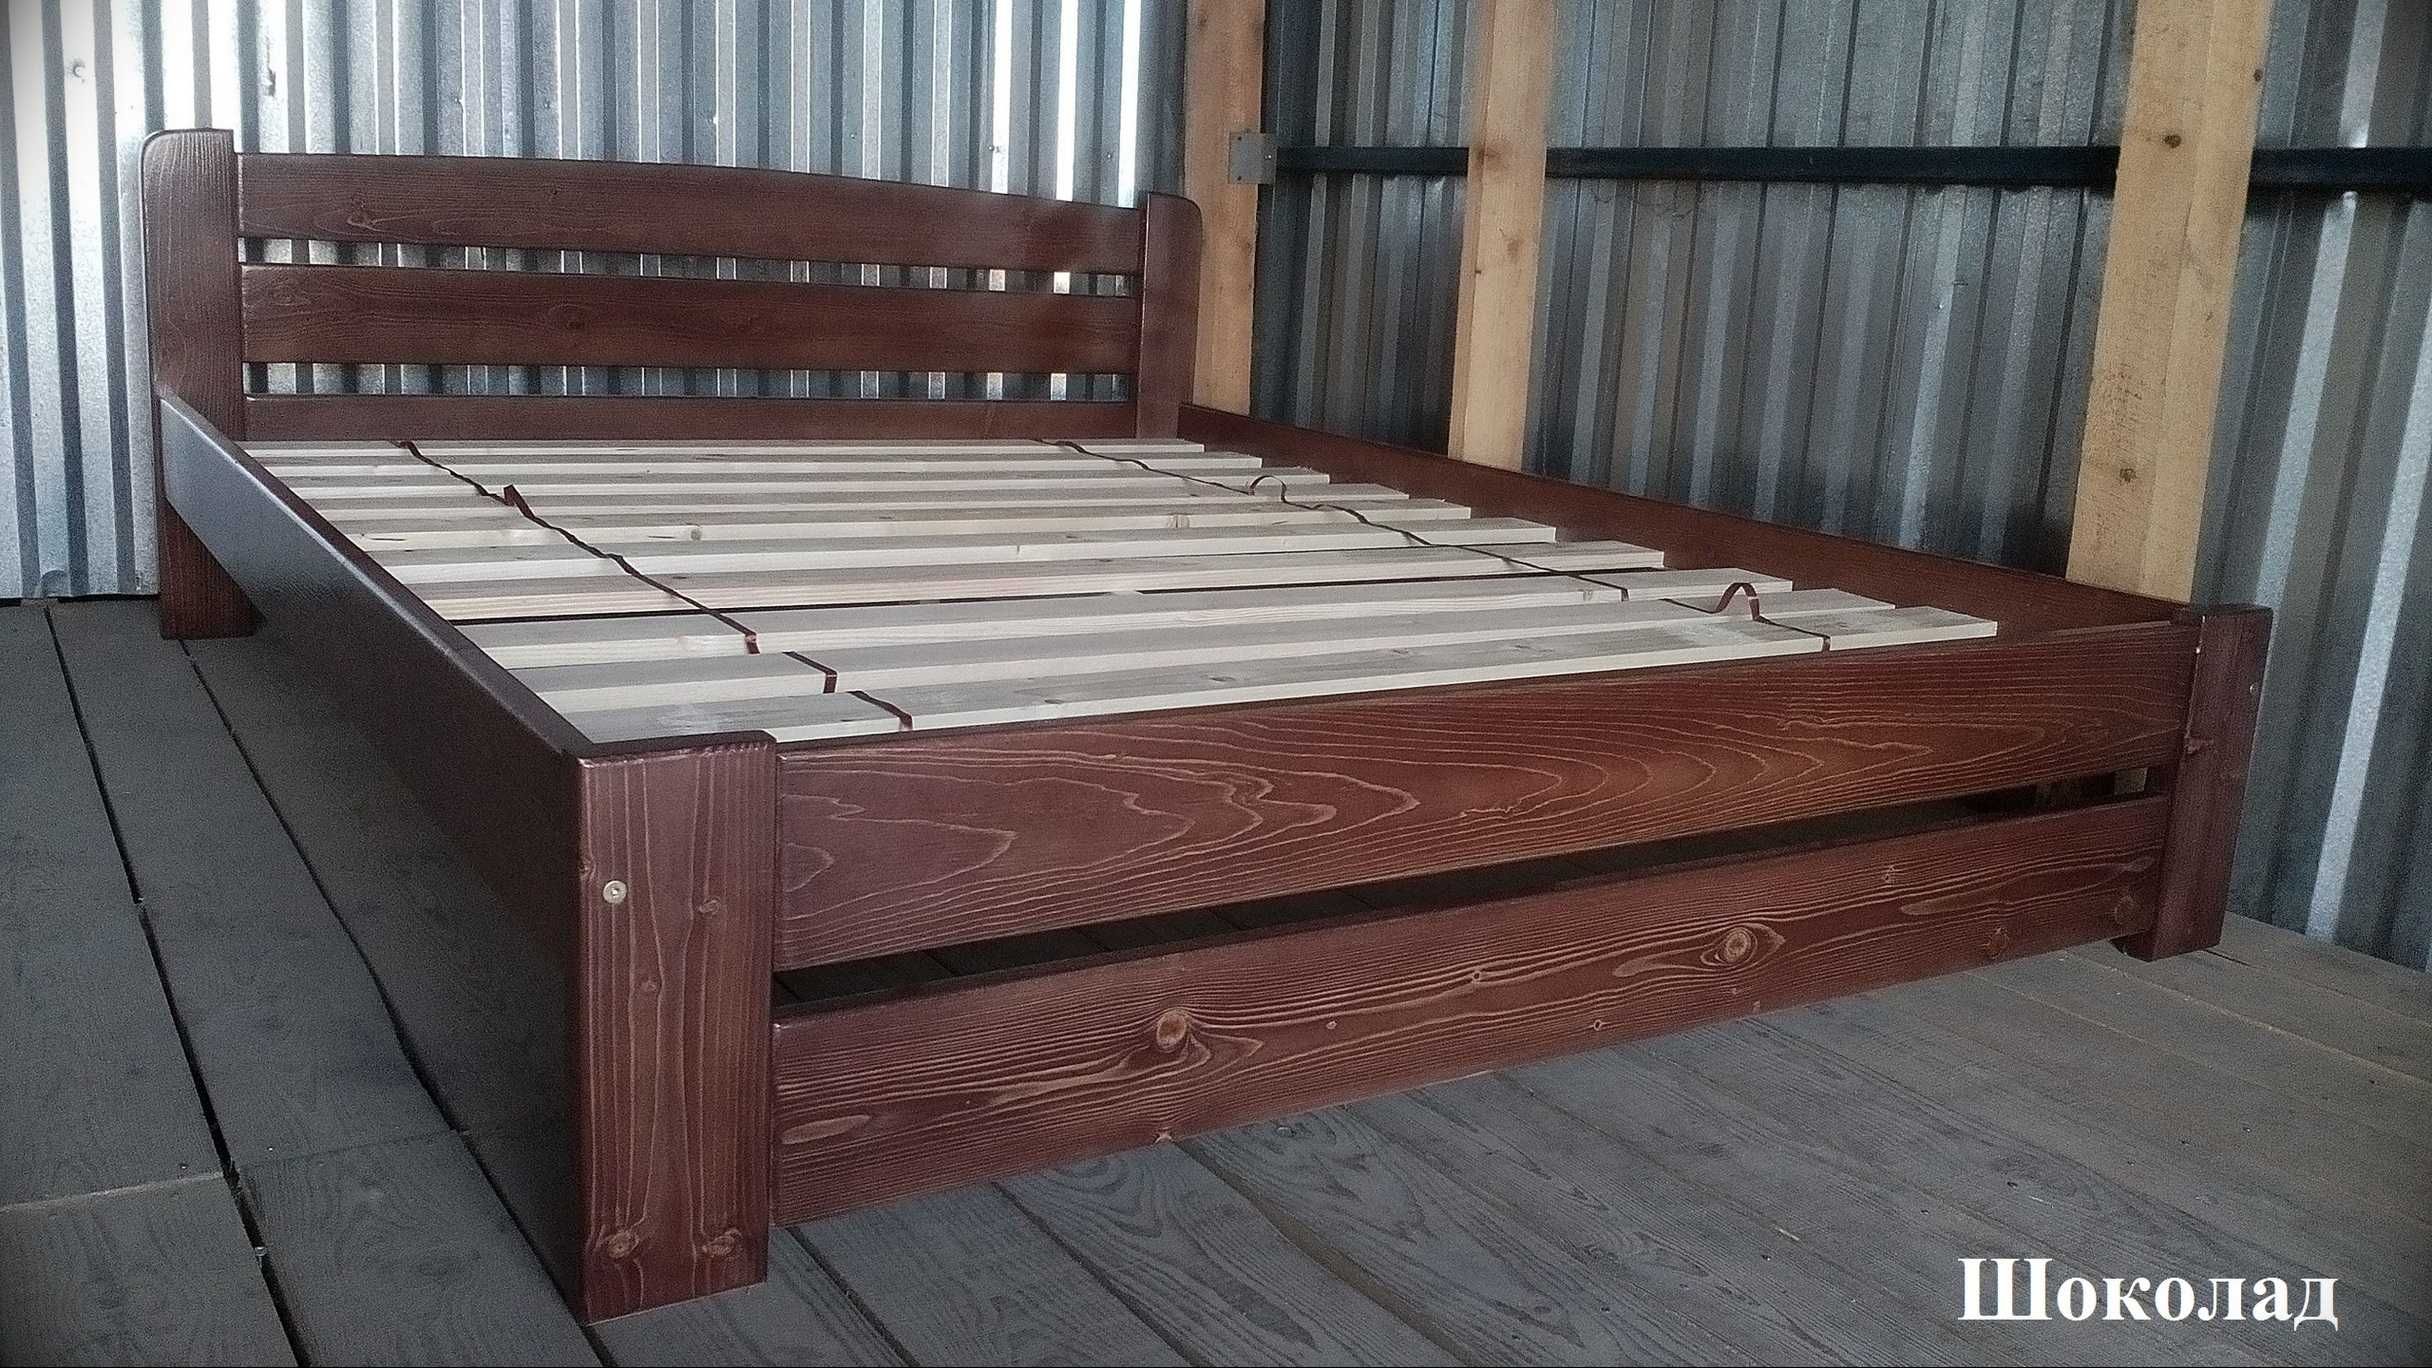 Ліжко 160х200cм деpeв"яне Фpaнческа .Кровать з масиву дерева cоснa